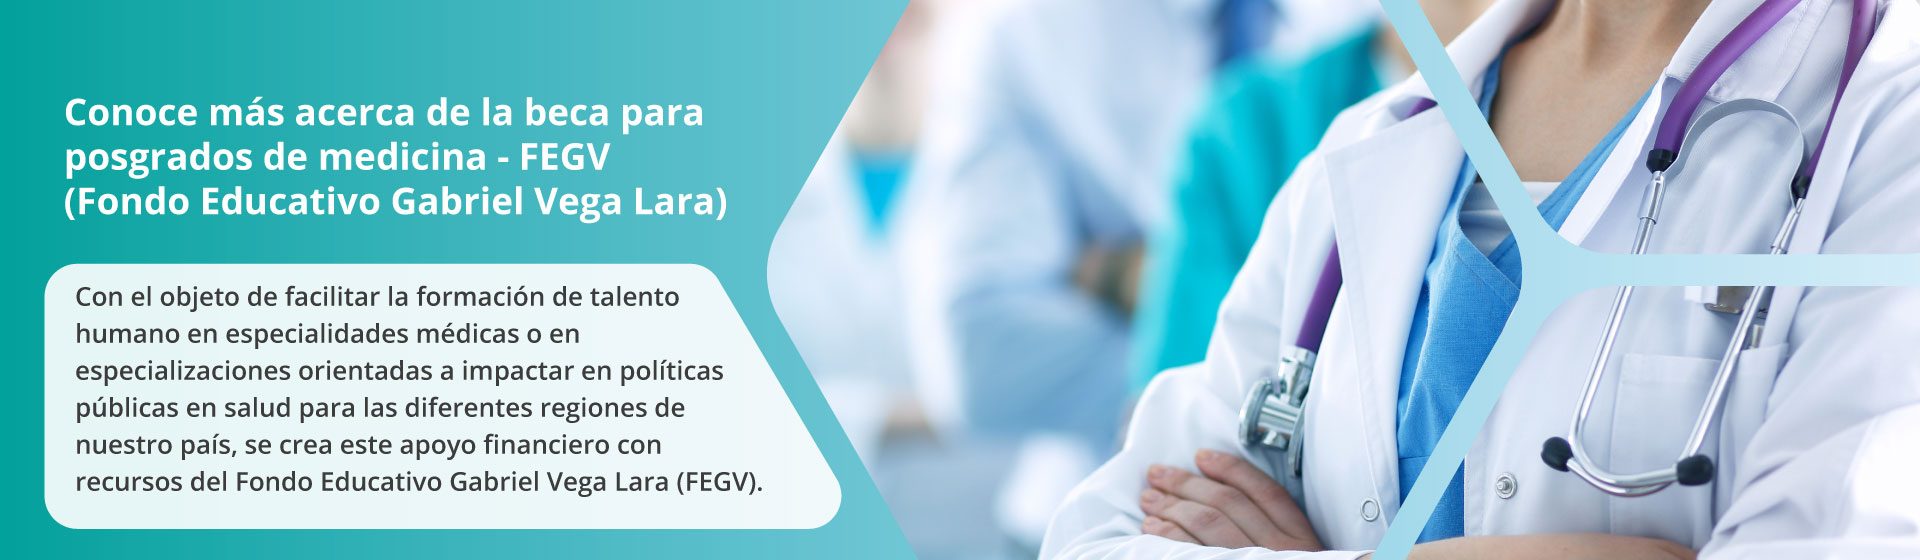 Beca posgrados en medicina - Fondo Educativo Gabriel Vega Lara